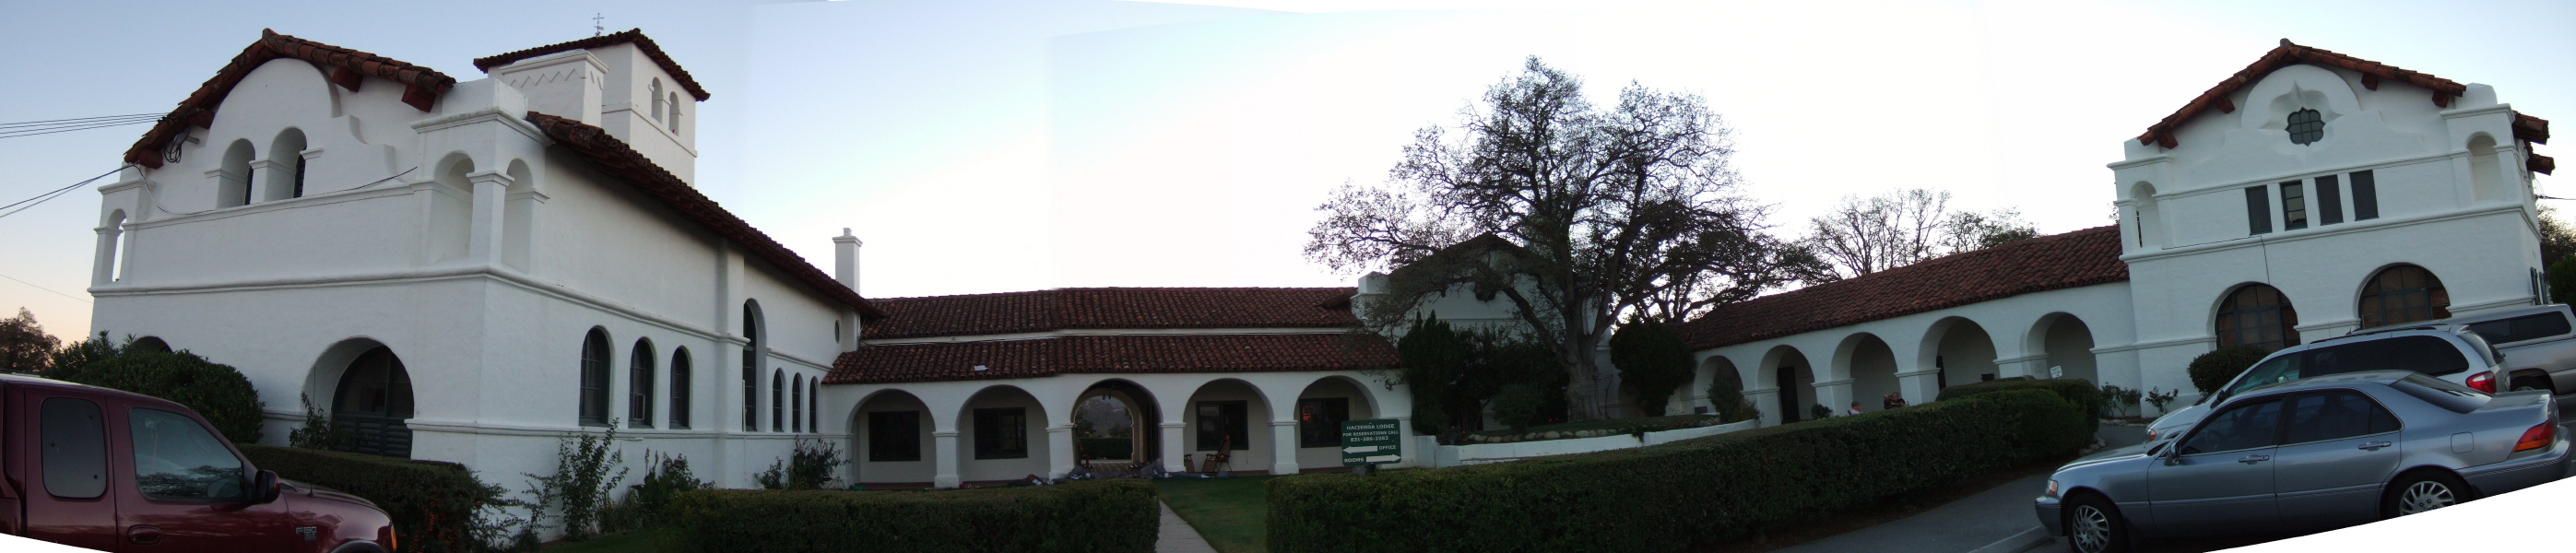 The Hacienda courtyard panorama.